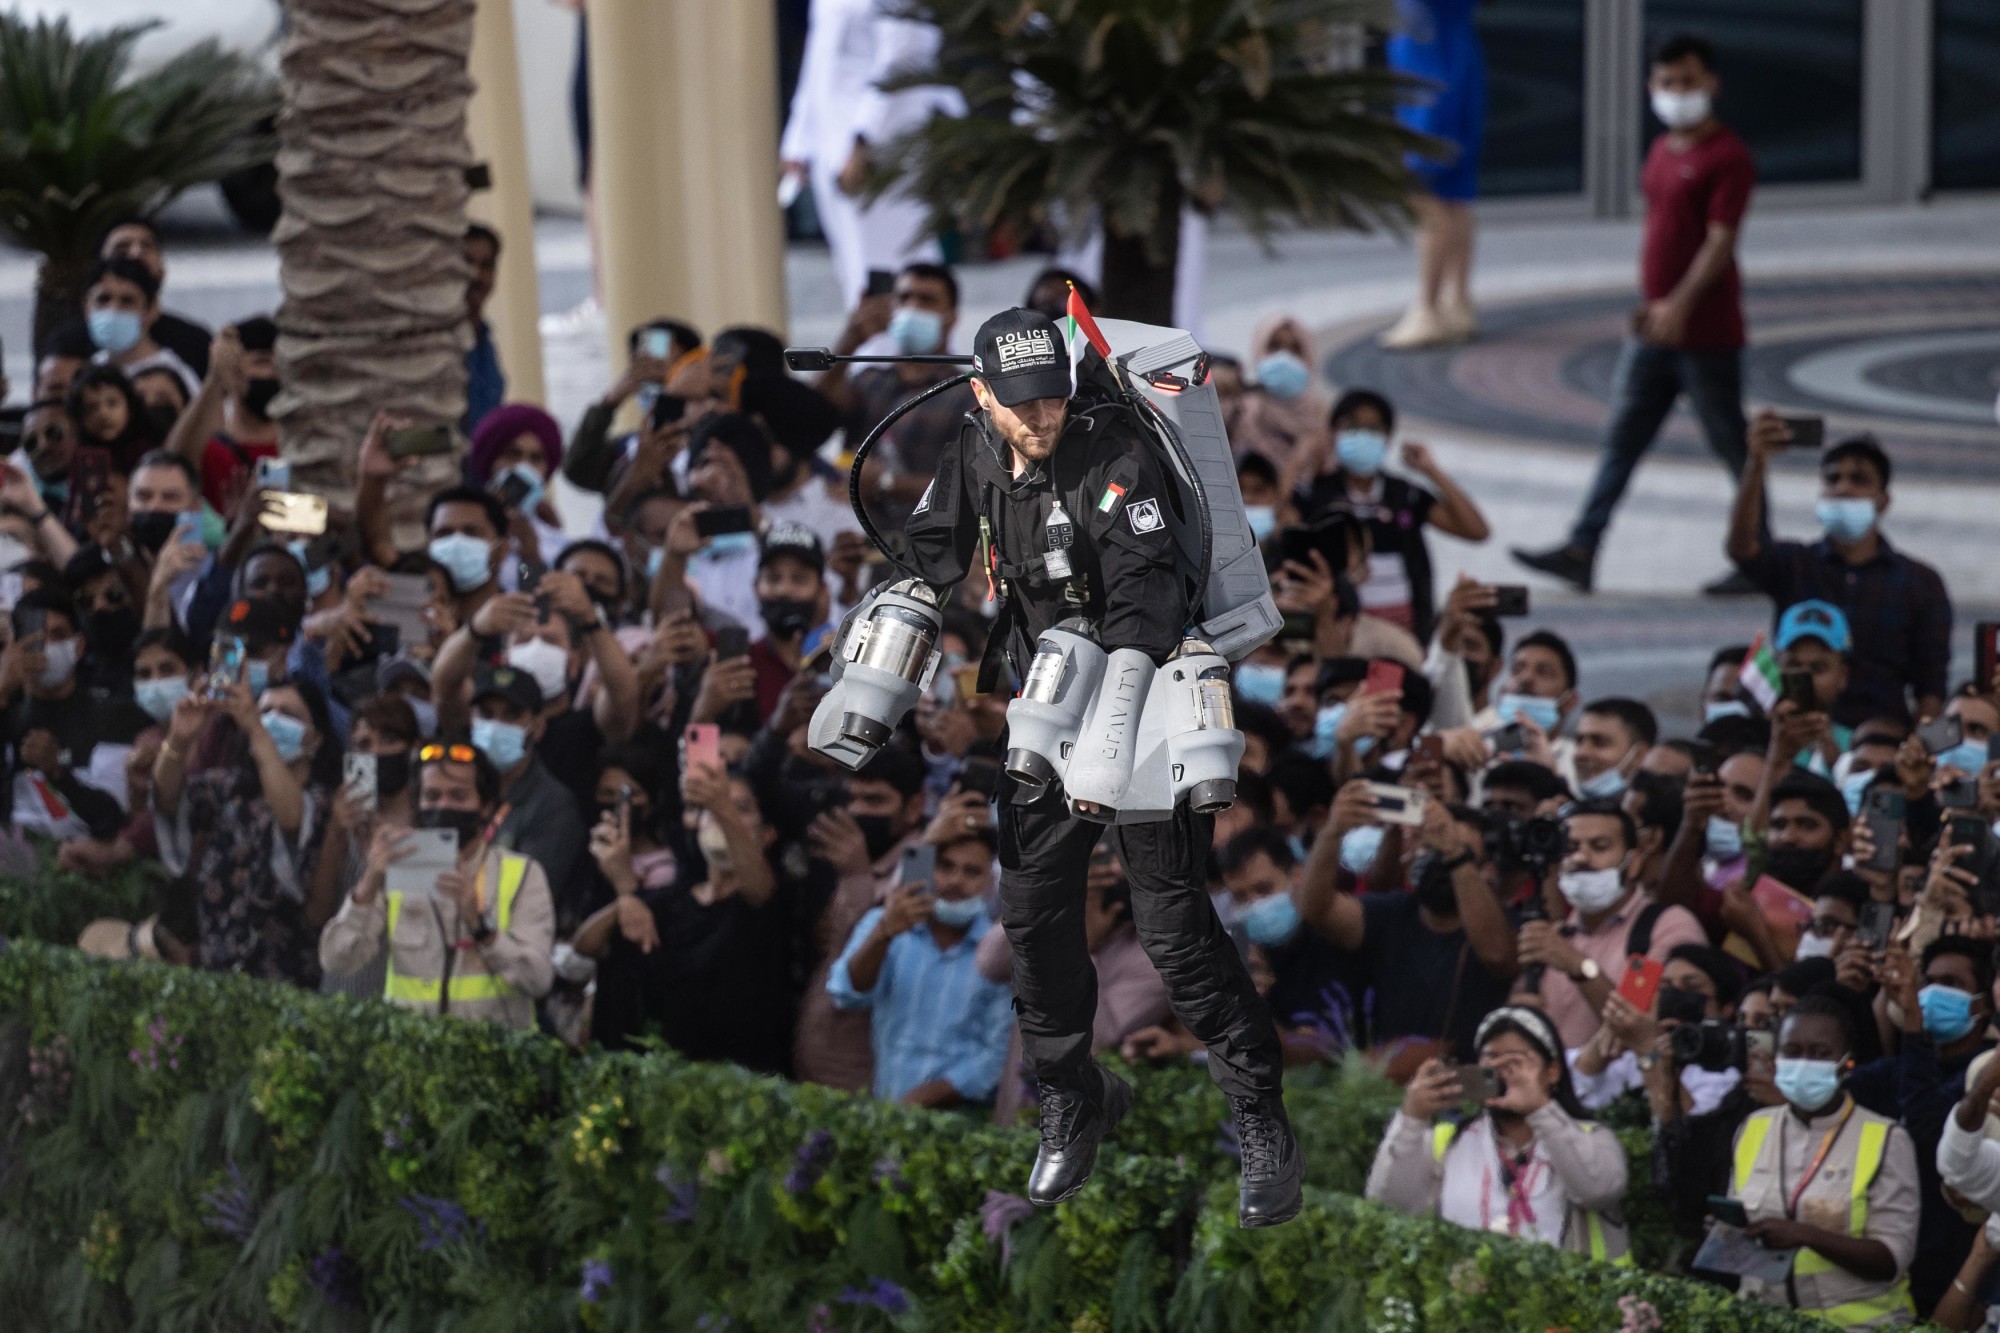 Dubai Police perform a gravity defying jetpack show 